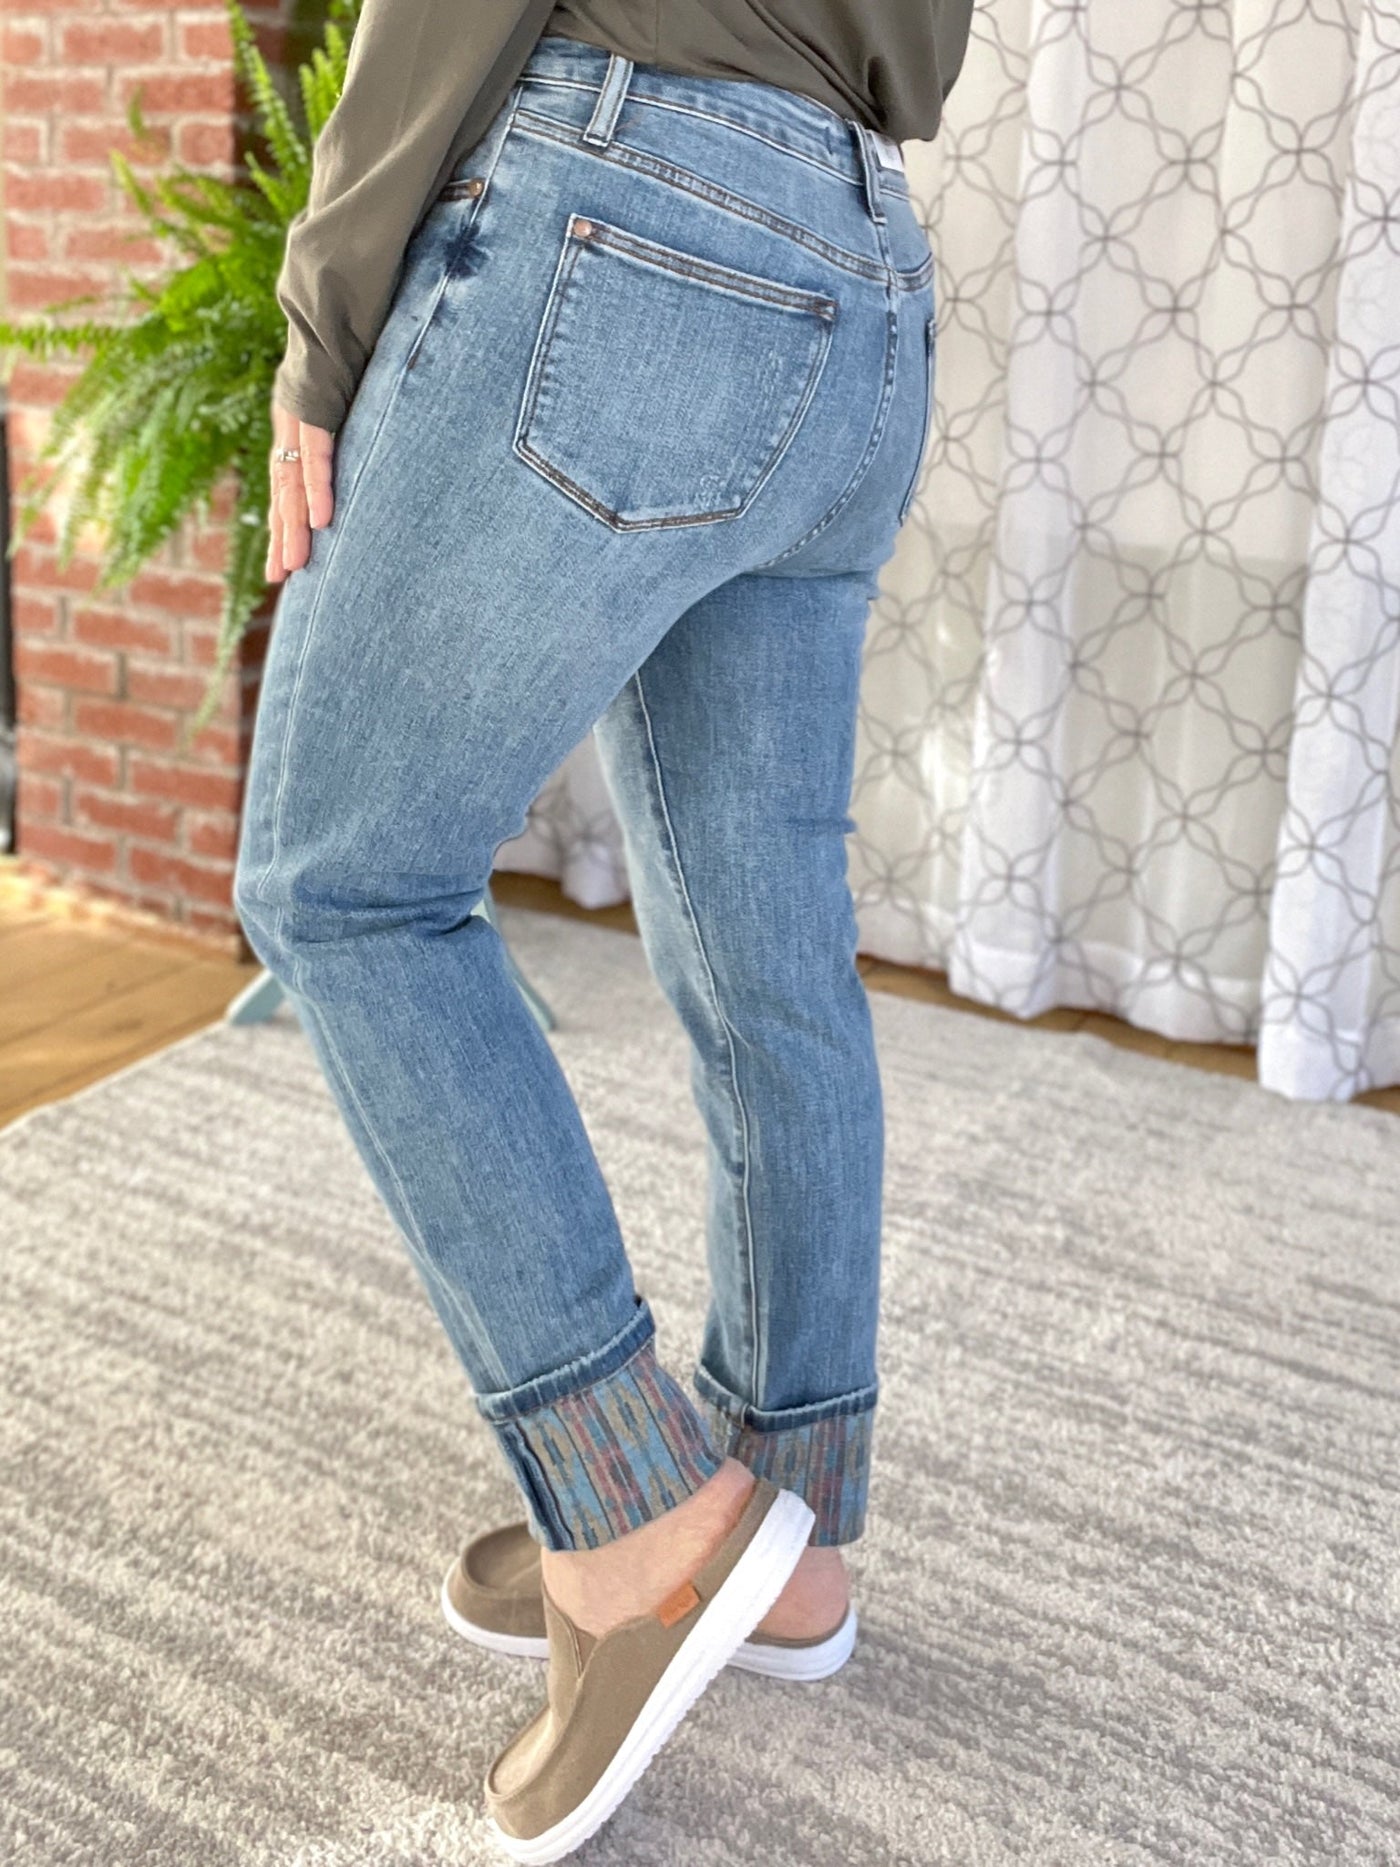 Judy Blue Southwestern Style Jeans